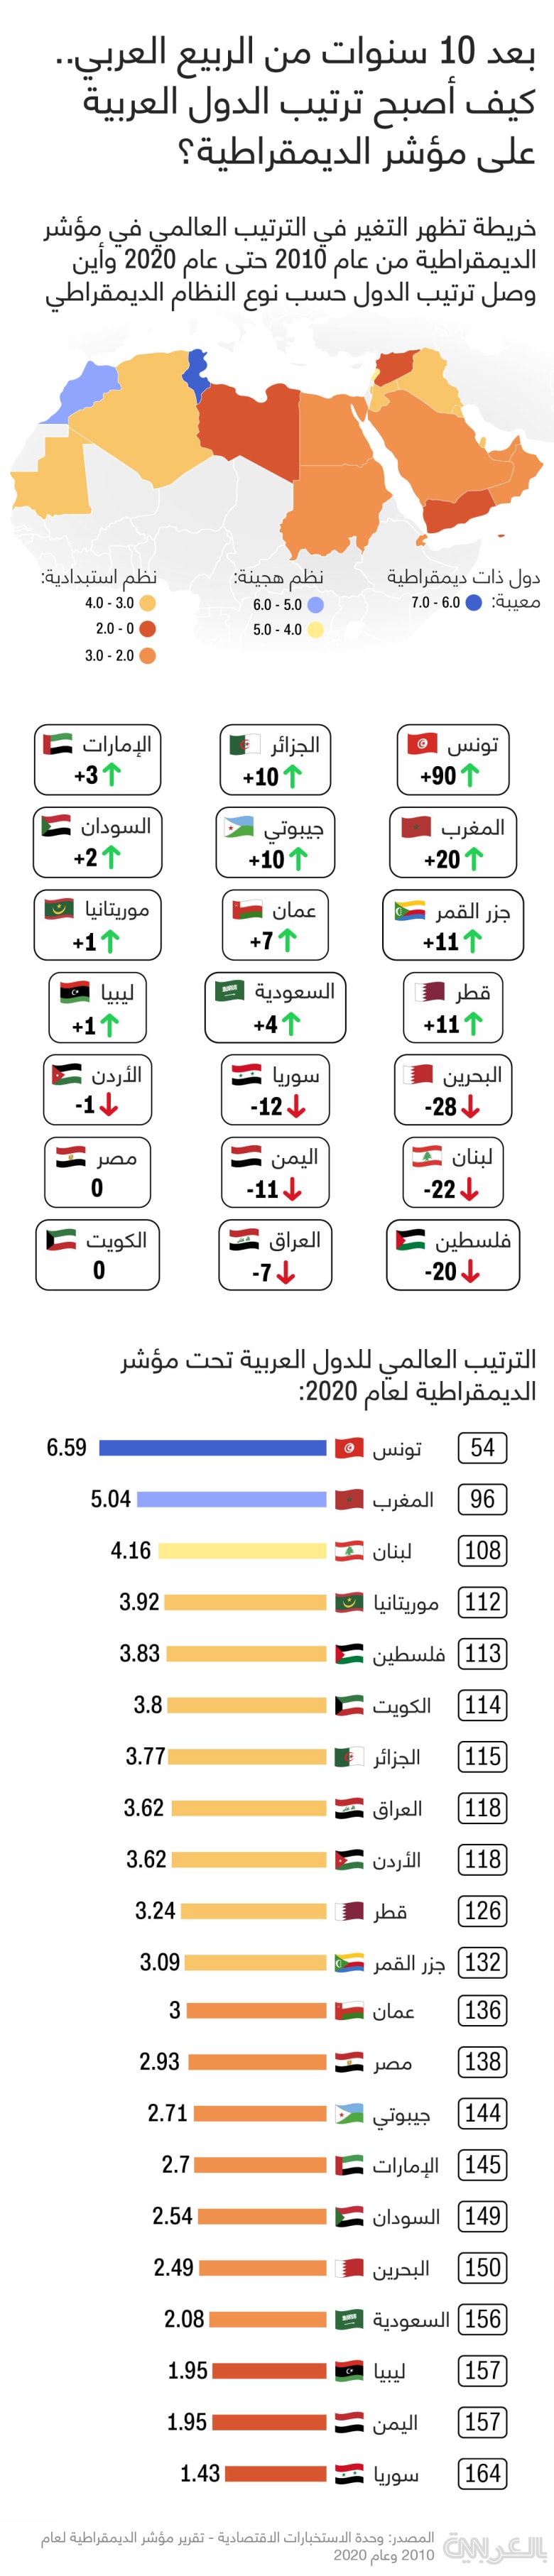 Democracy-Index-after-Arab-swing